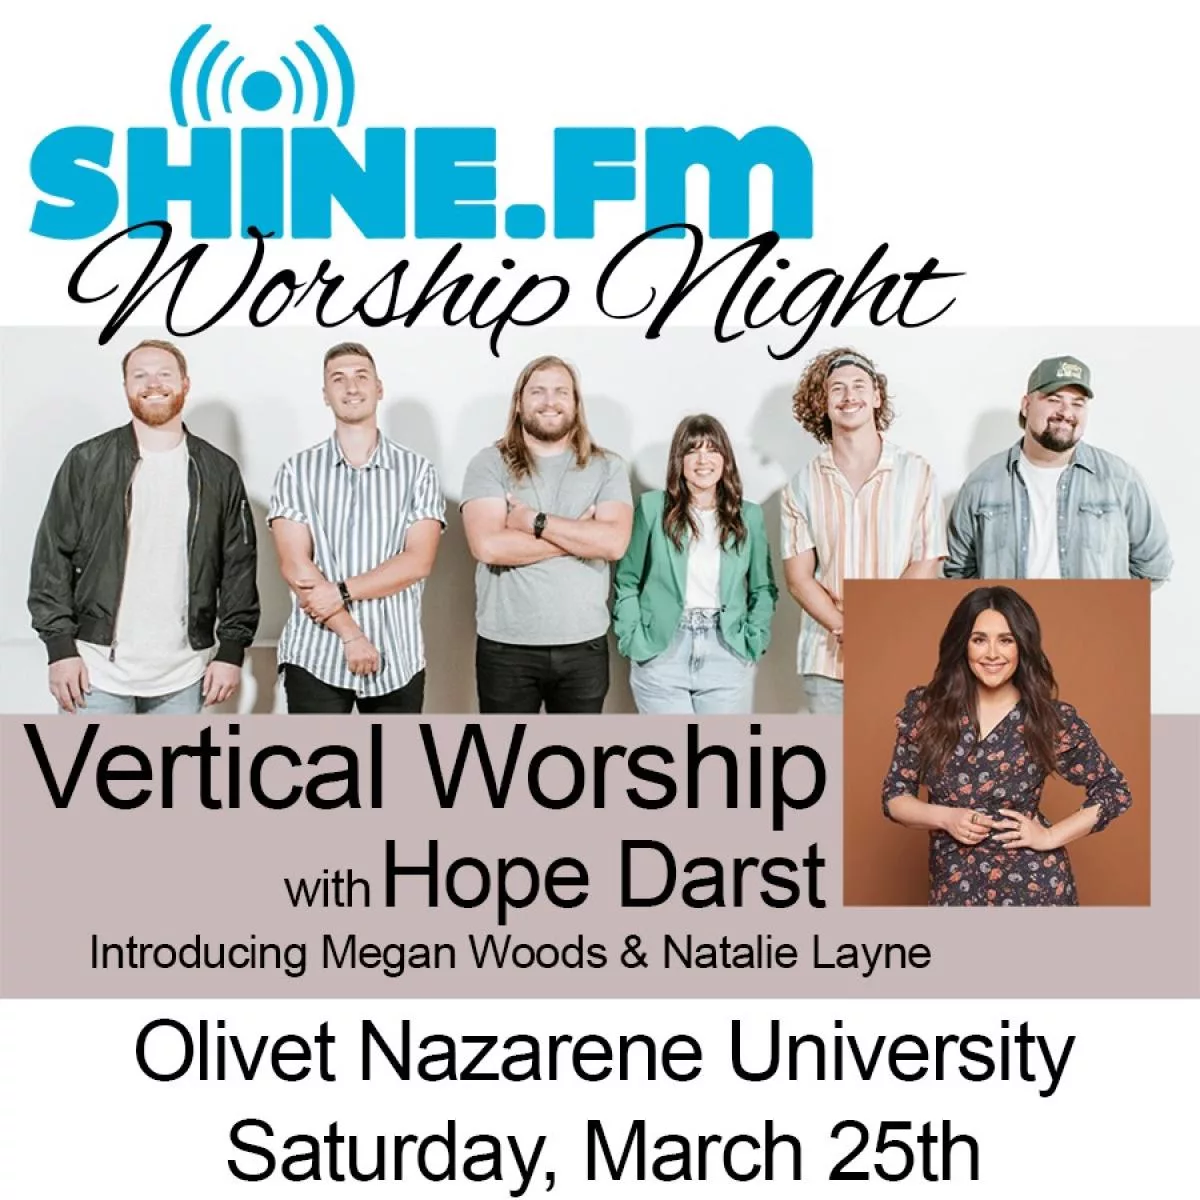 Shine.FM Worship Night with Vertical Worship and Hope Darst